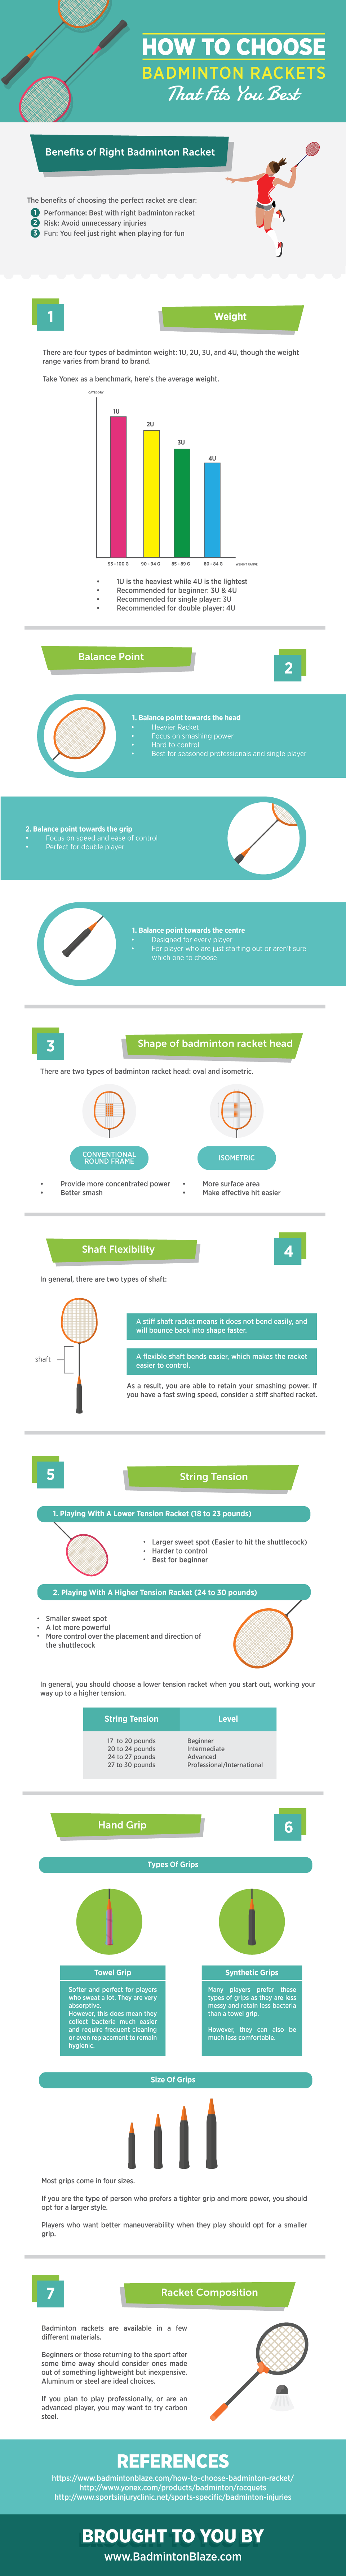 rare Correctly Artifact How To Choose a Badminton Racket That Fits You Best - BadmintonBlaze.com